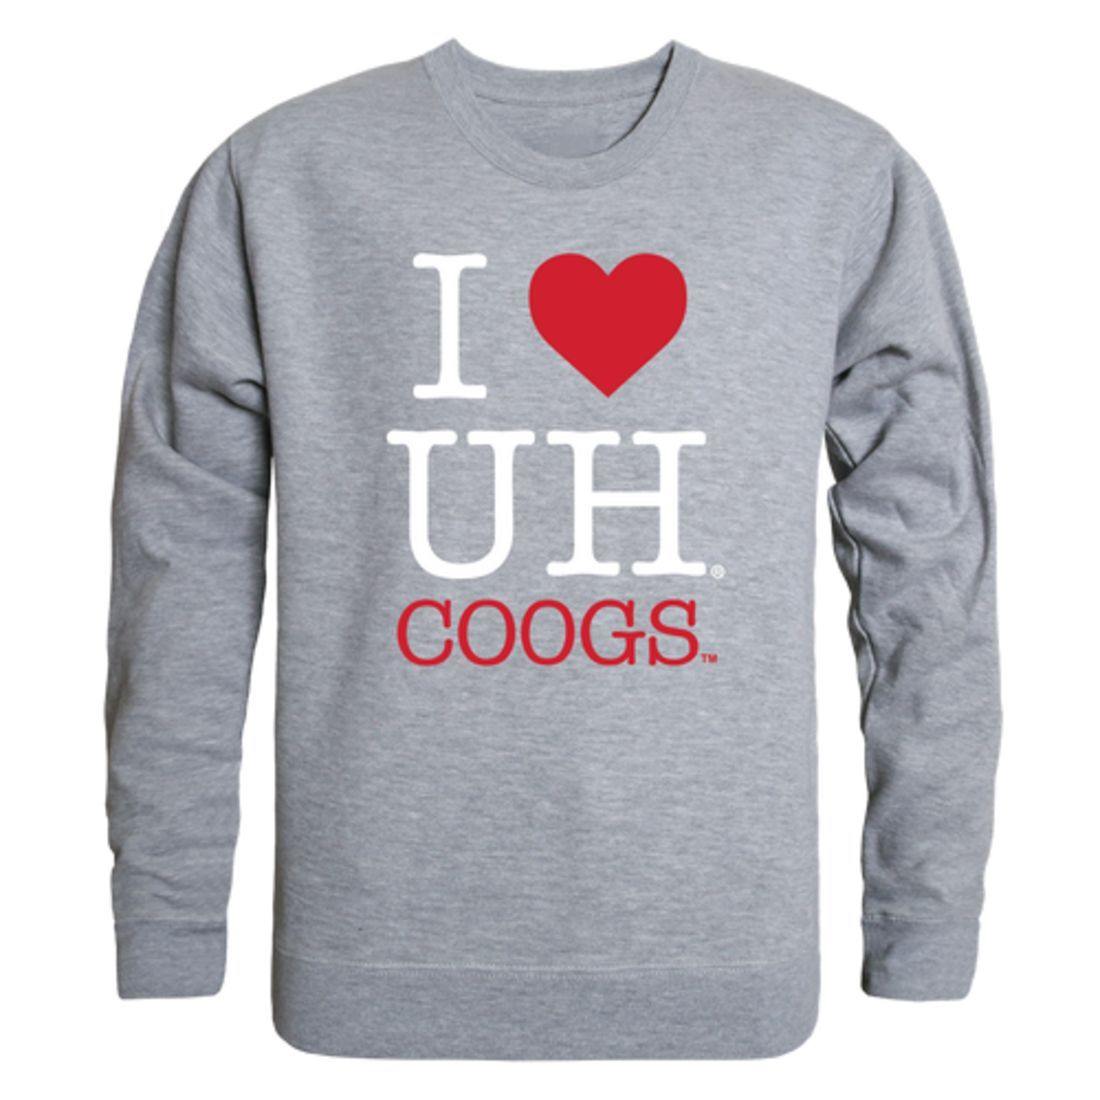 I Love UH University of Houston Cougars Crewneck Pullover Sweatshirt Sweater-Campus-Wardrobe